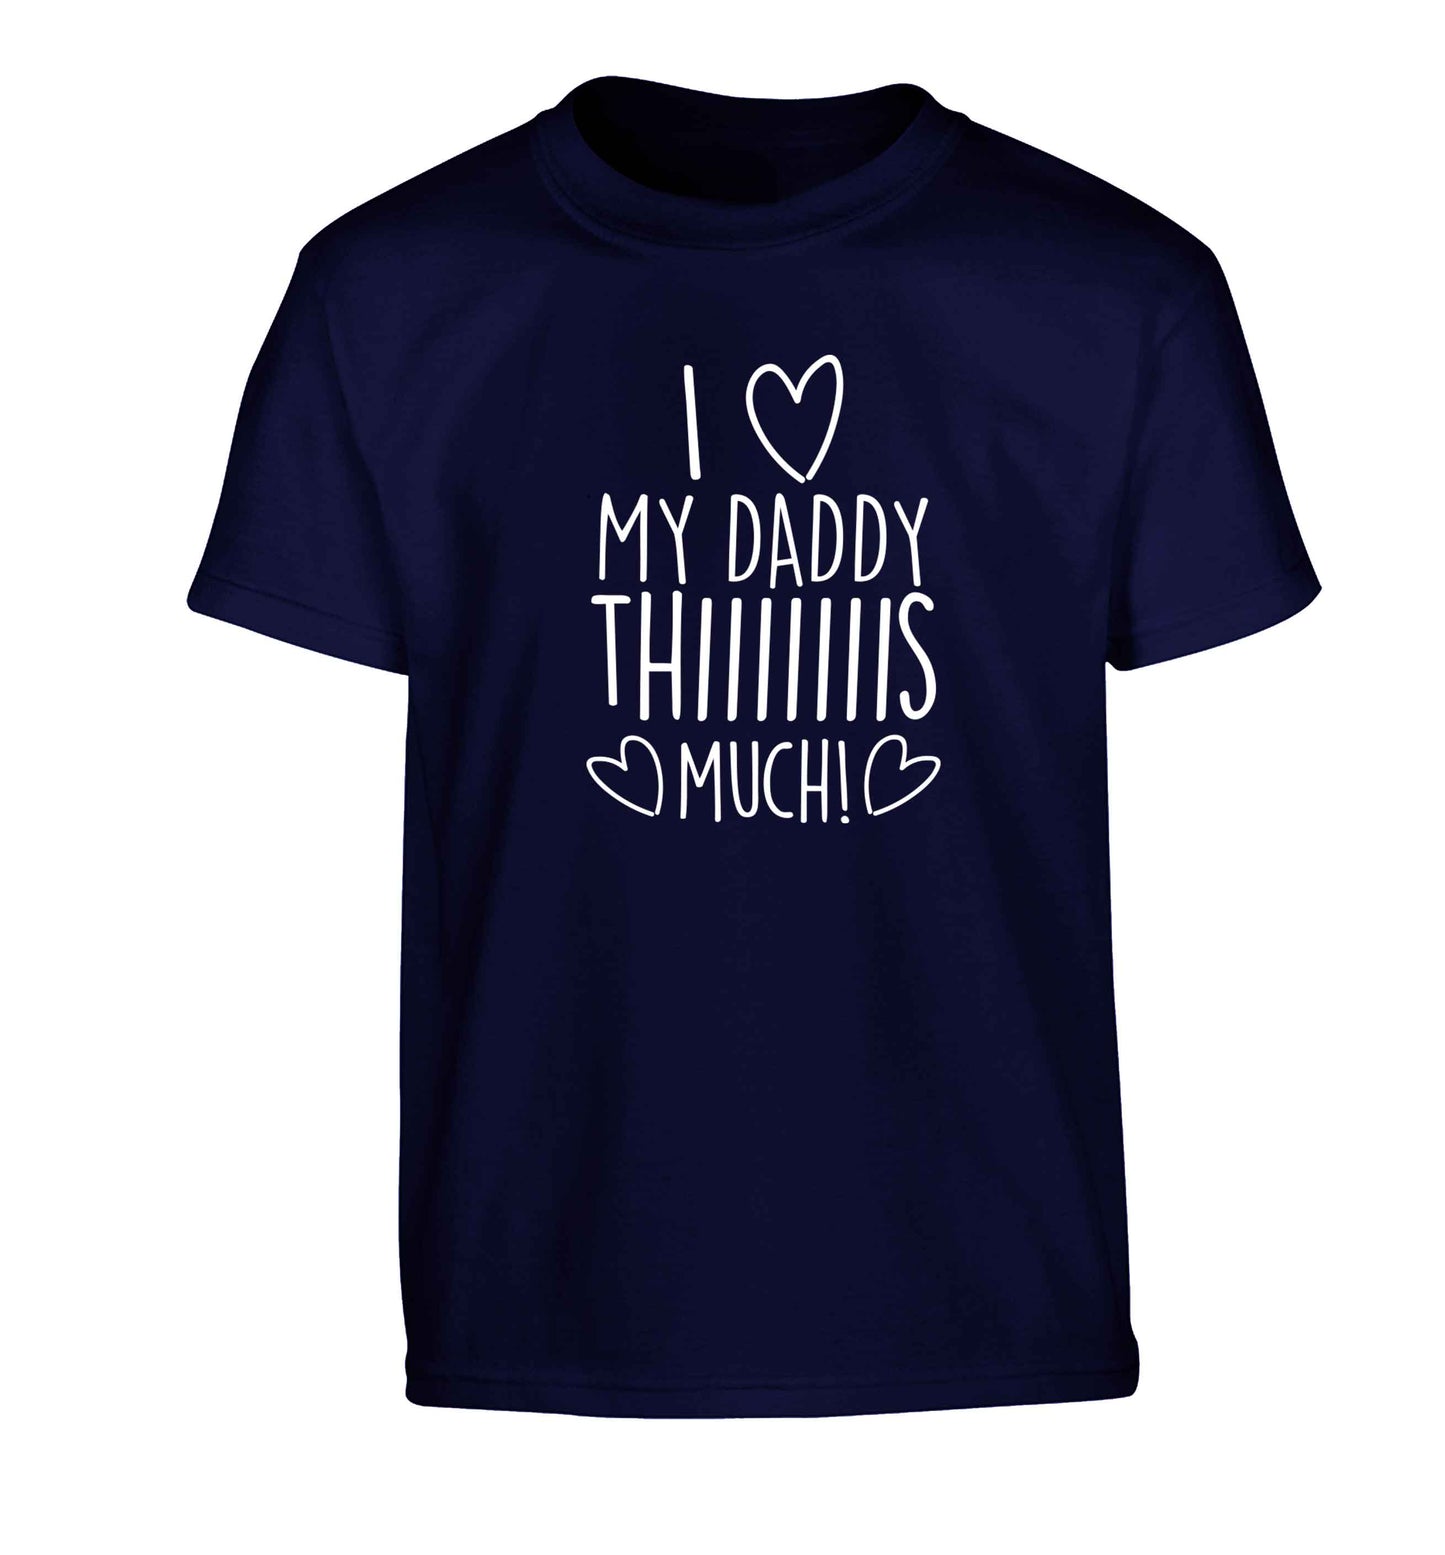 I love my daddy thiiiiis much! Children's navy Tshirt 12-13 Years